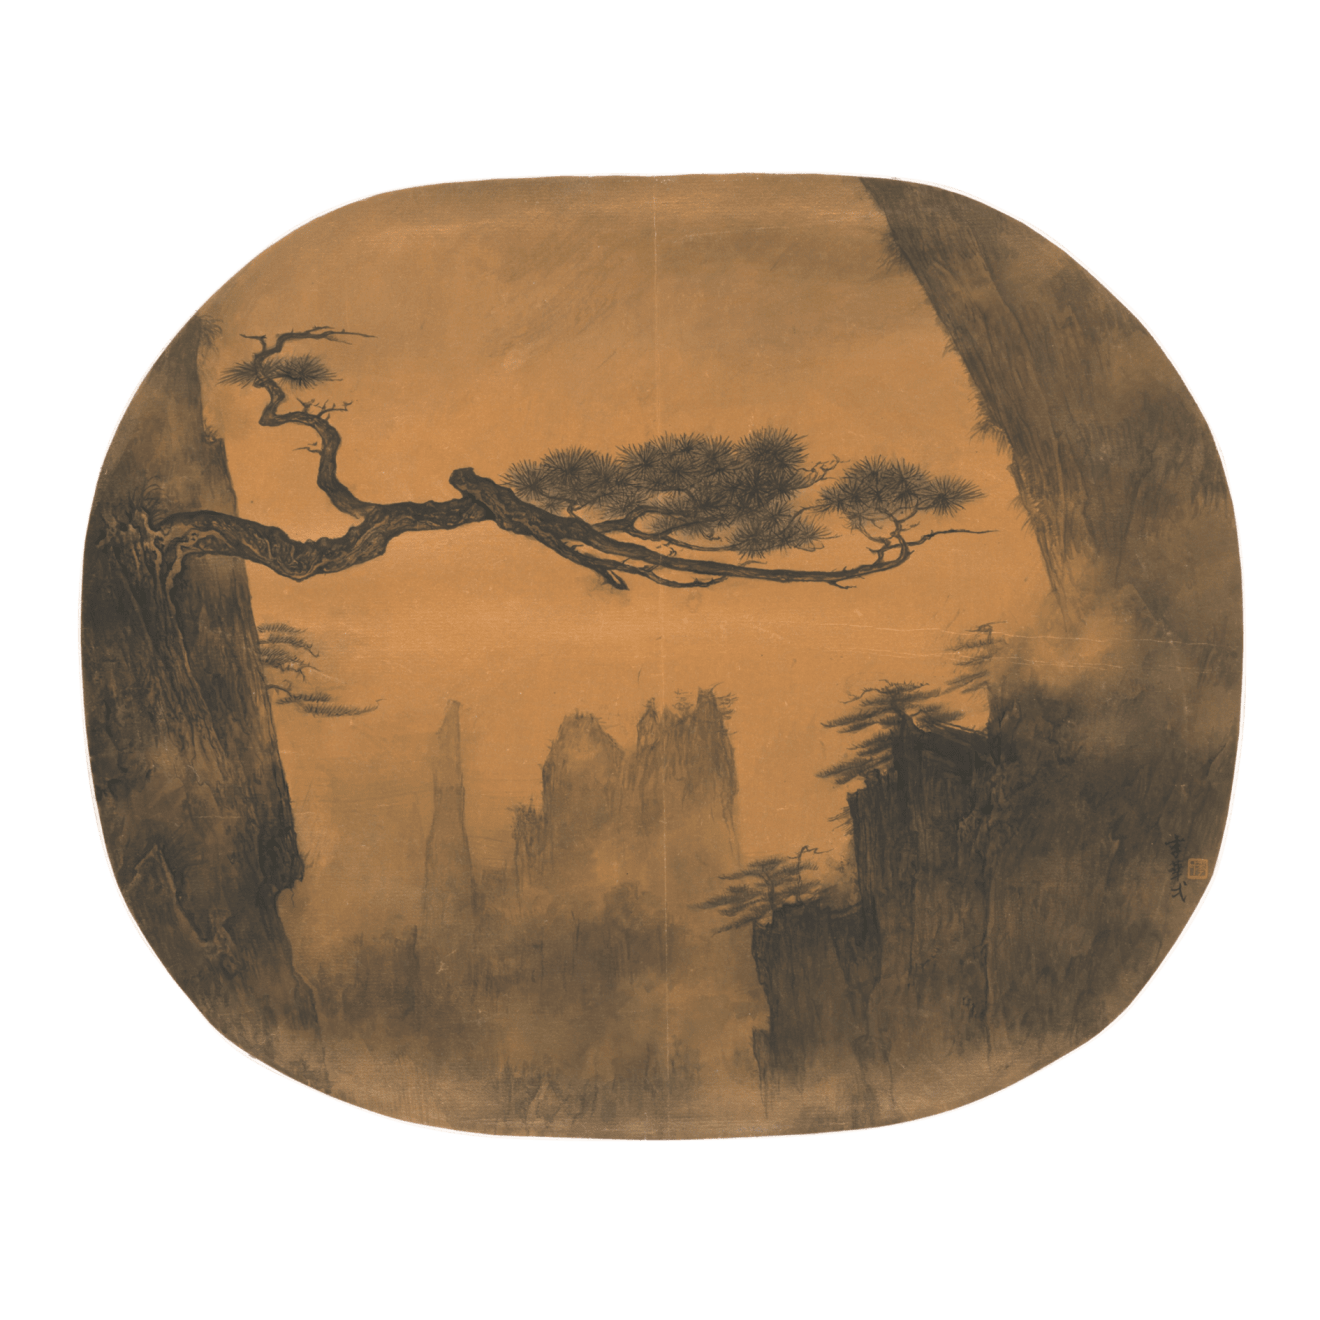 Li Huayi 李華弌, One Pinetree 《遠山孤松》, 2005